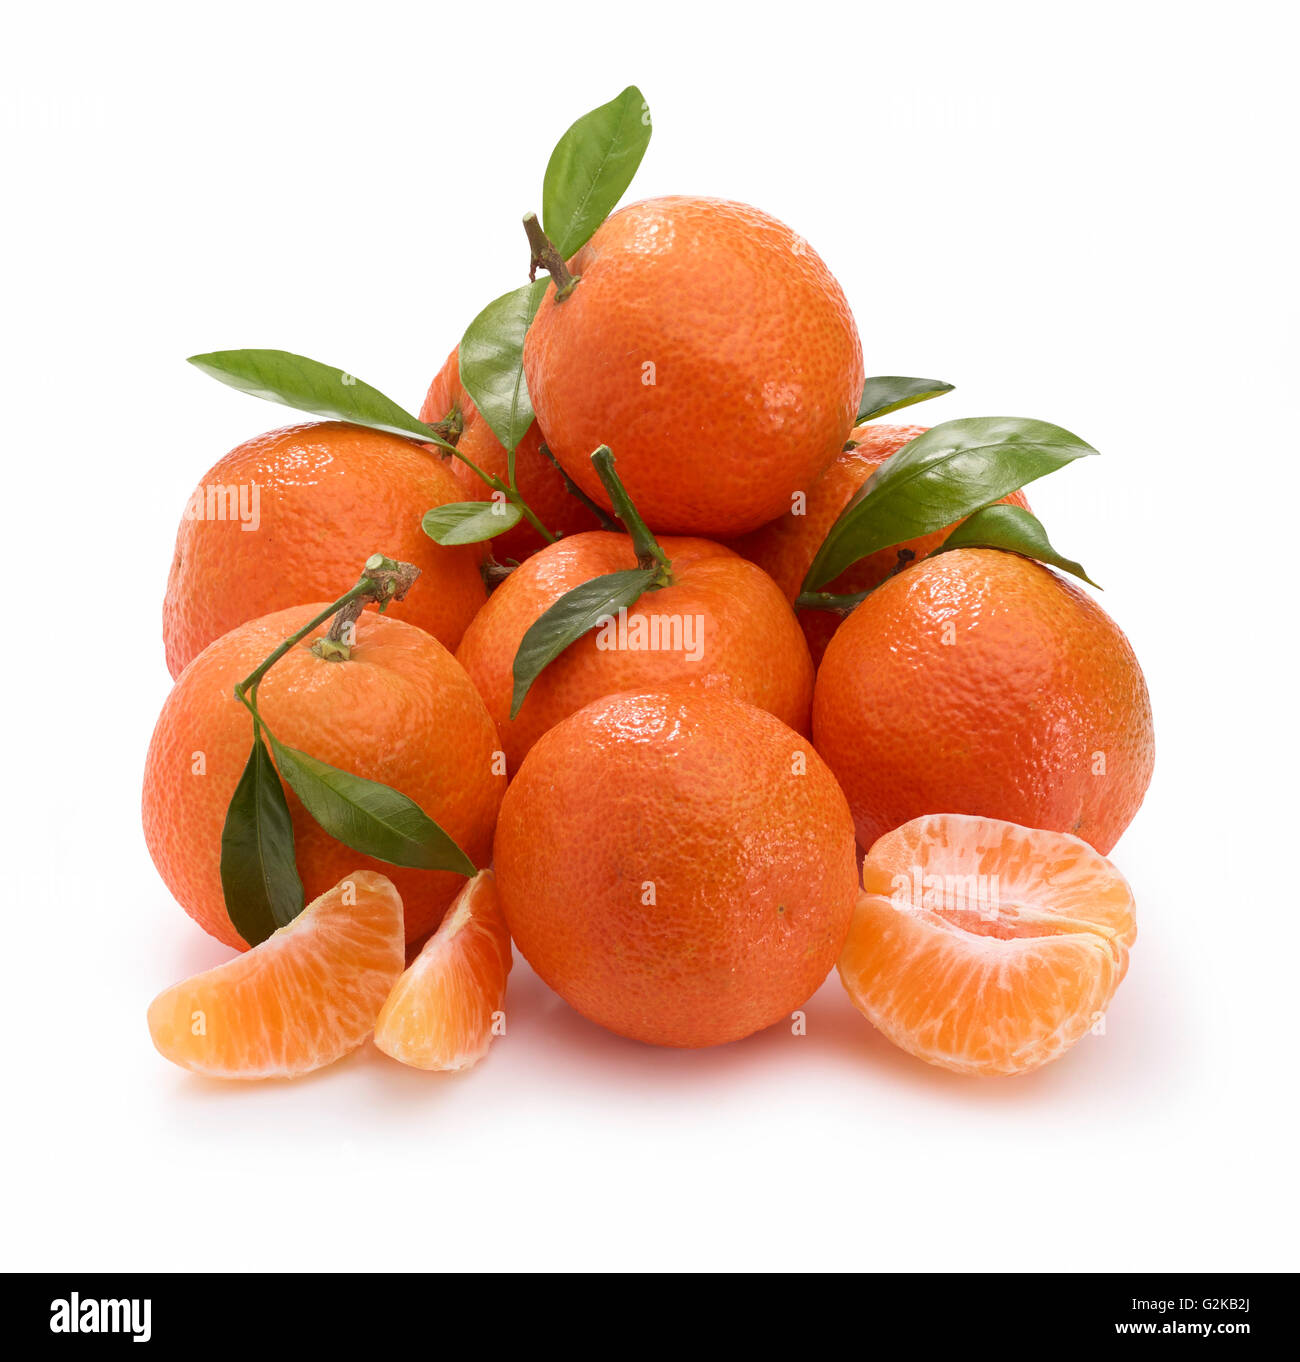 Mandarins (Citrus reticulata) with leaves, white background Stock Photo